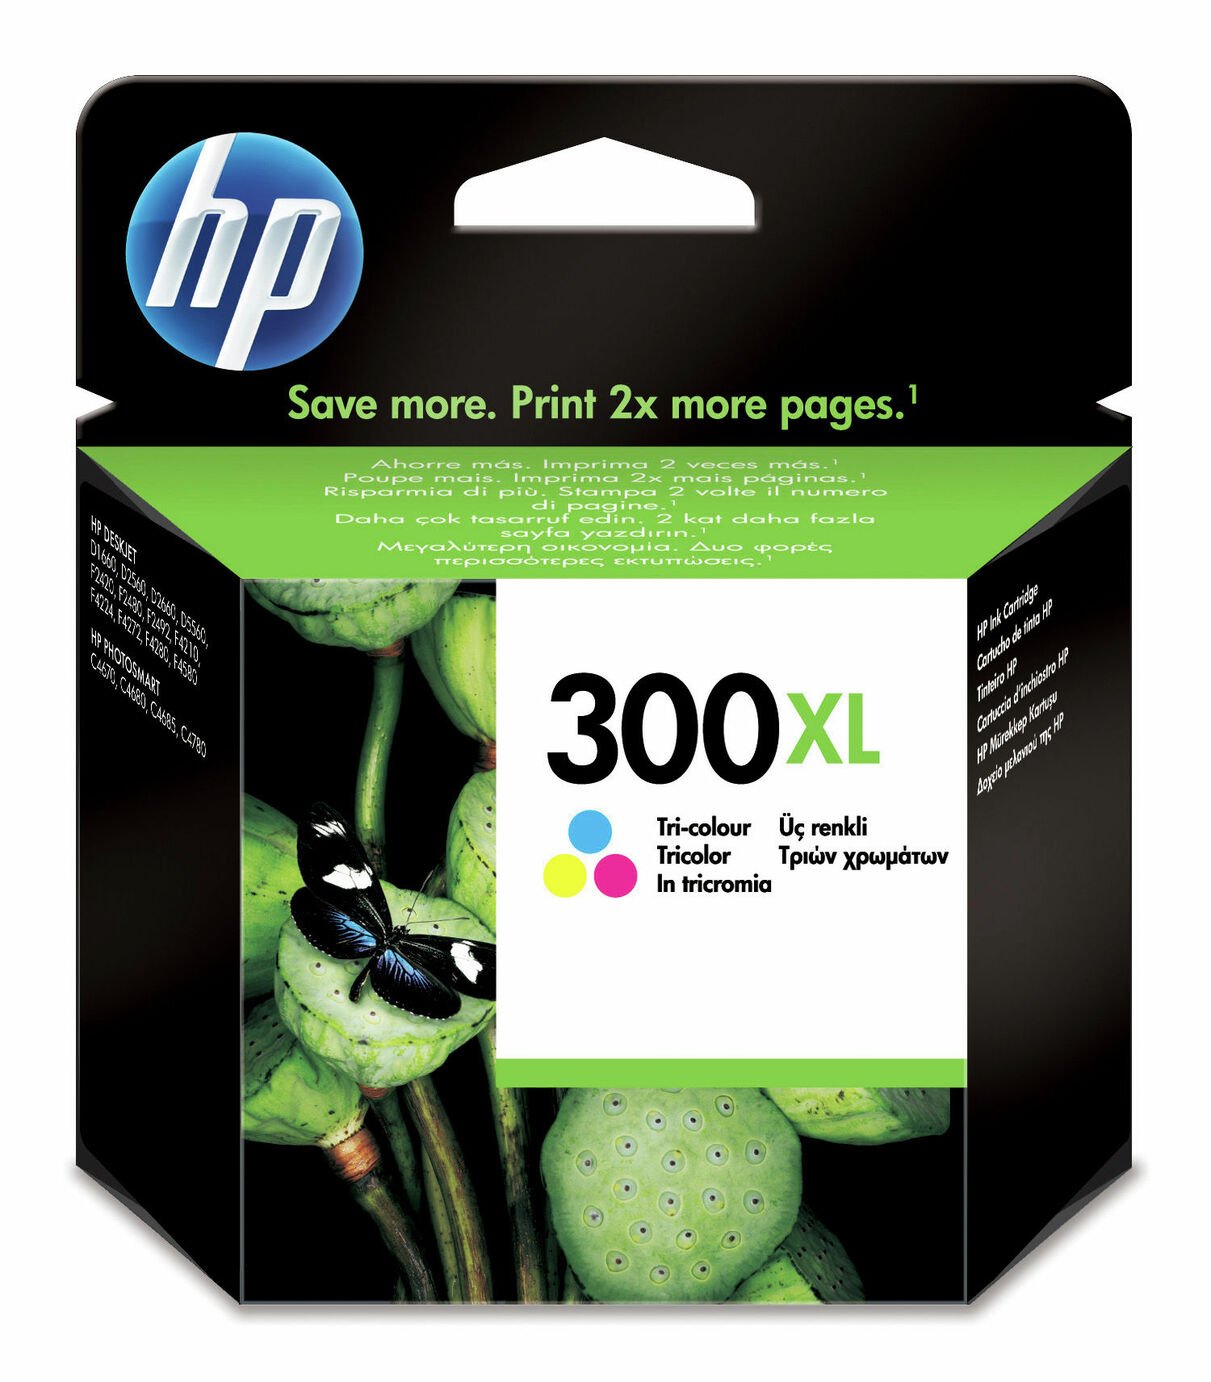 HP 300XL High-Yield Original Ink Cartridge Review